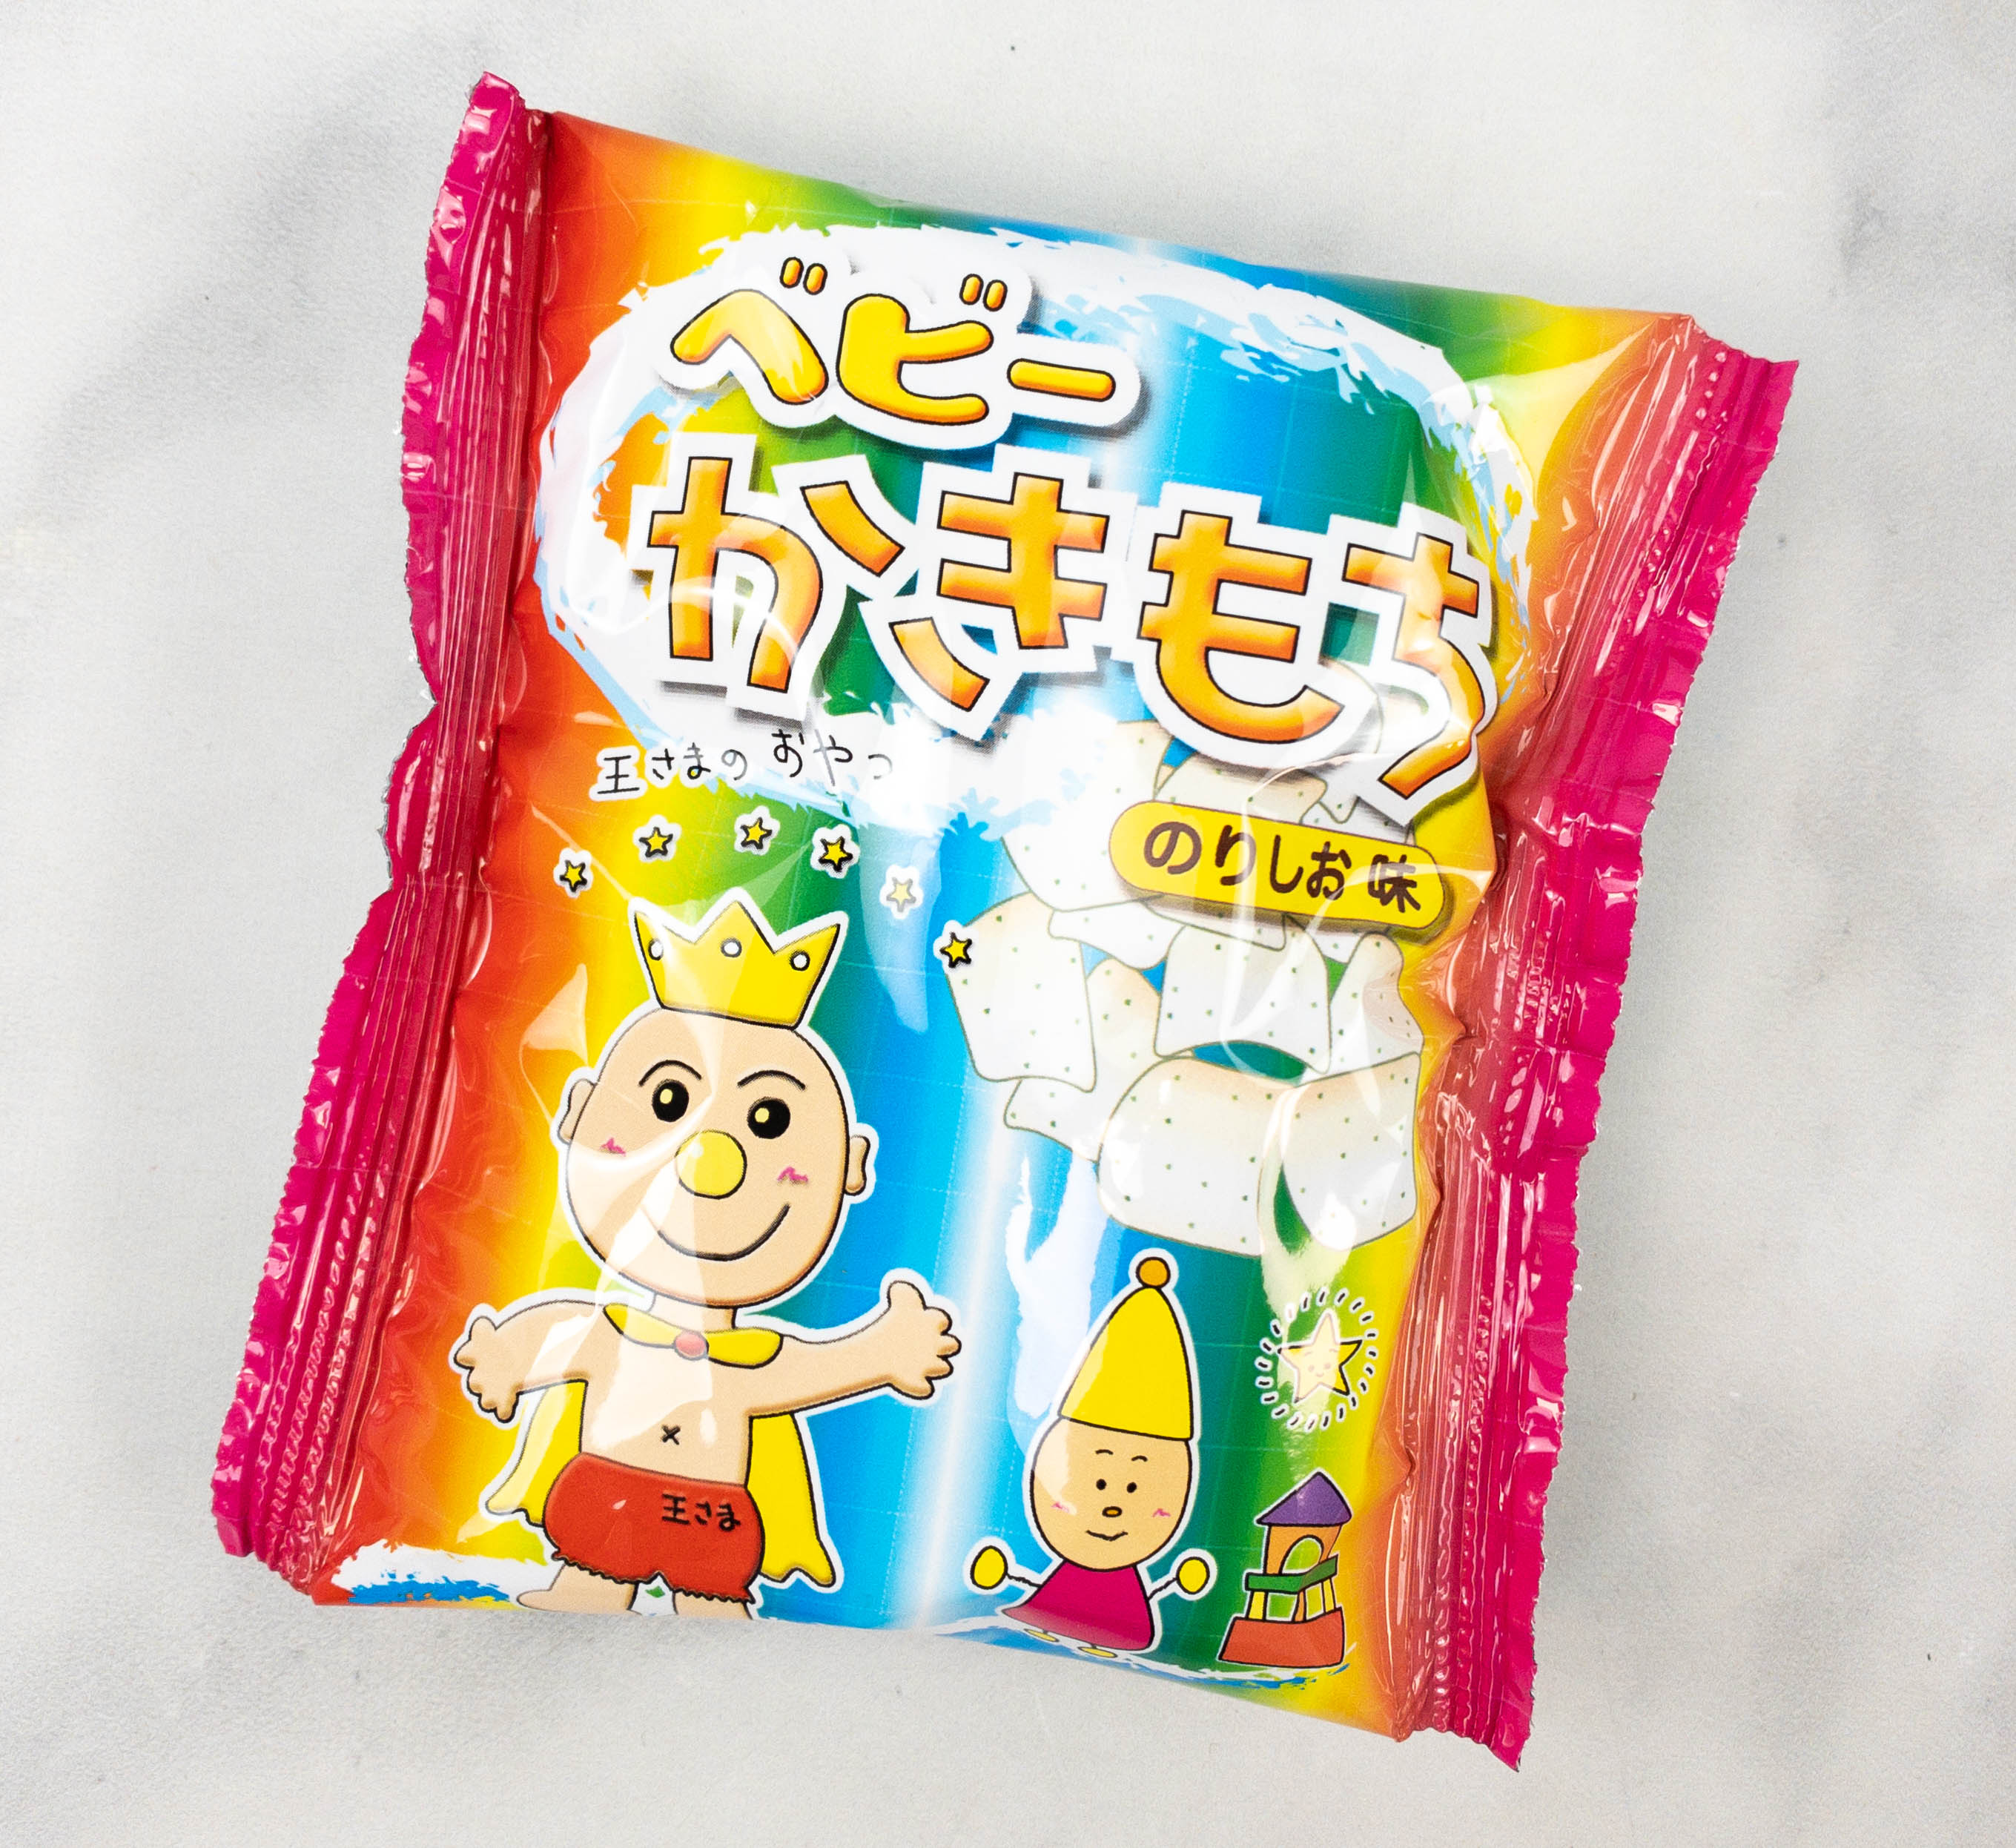 Tokyo Treat Crate - Fun box of Japanese Snacks! ⋆ Jupiter & Dann